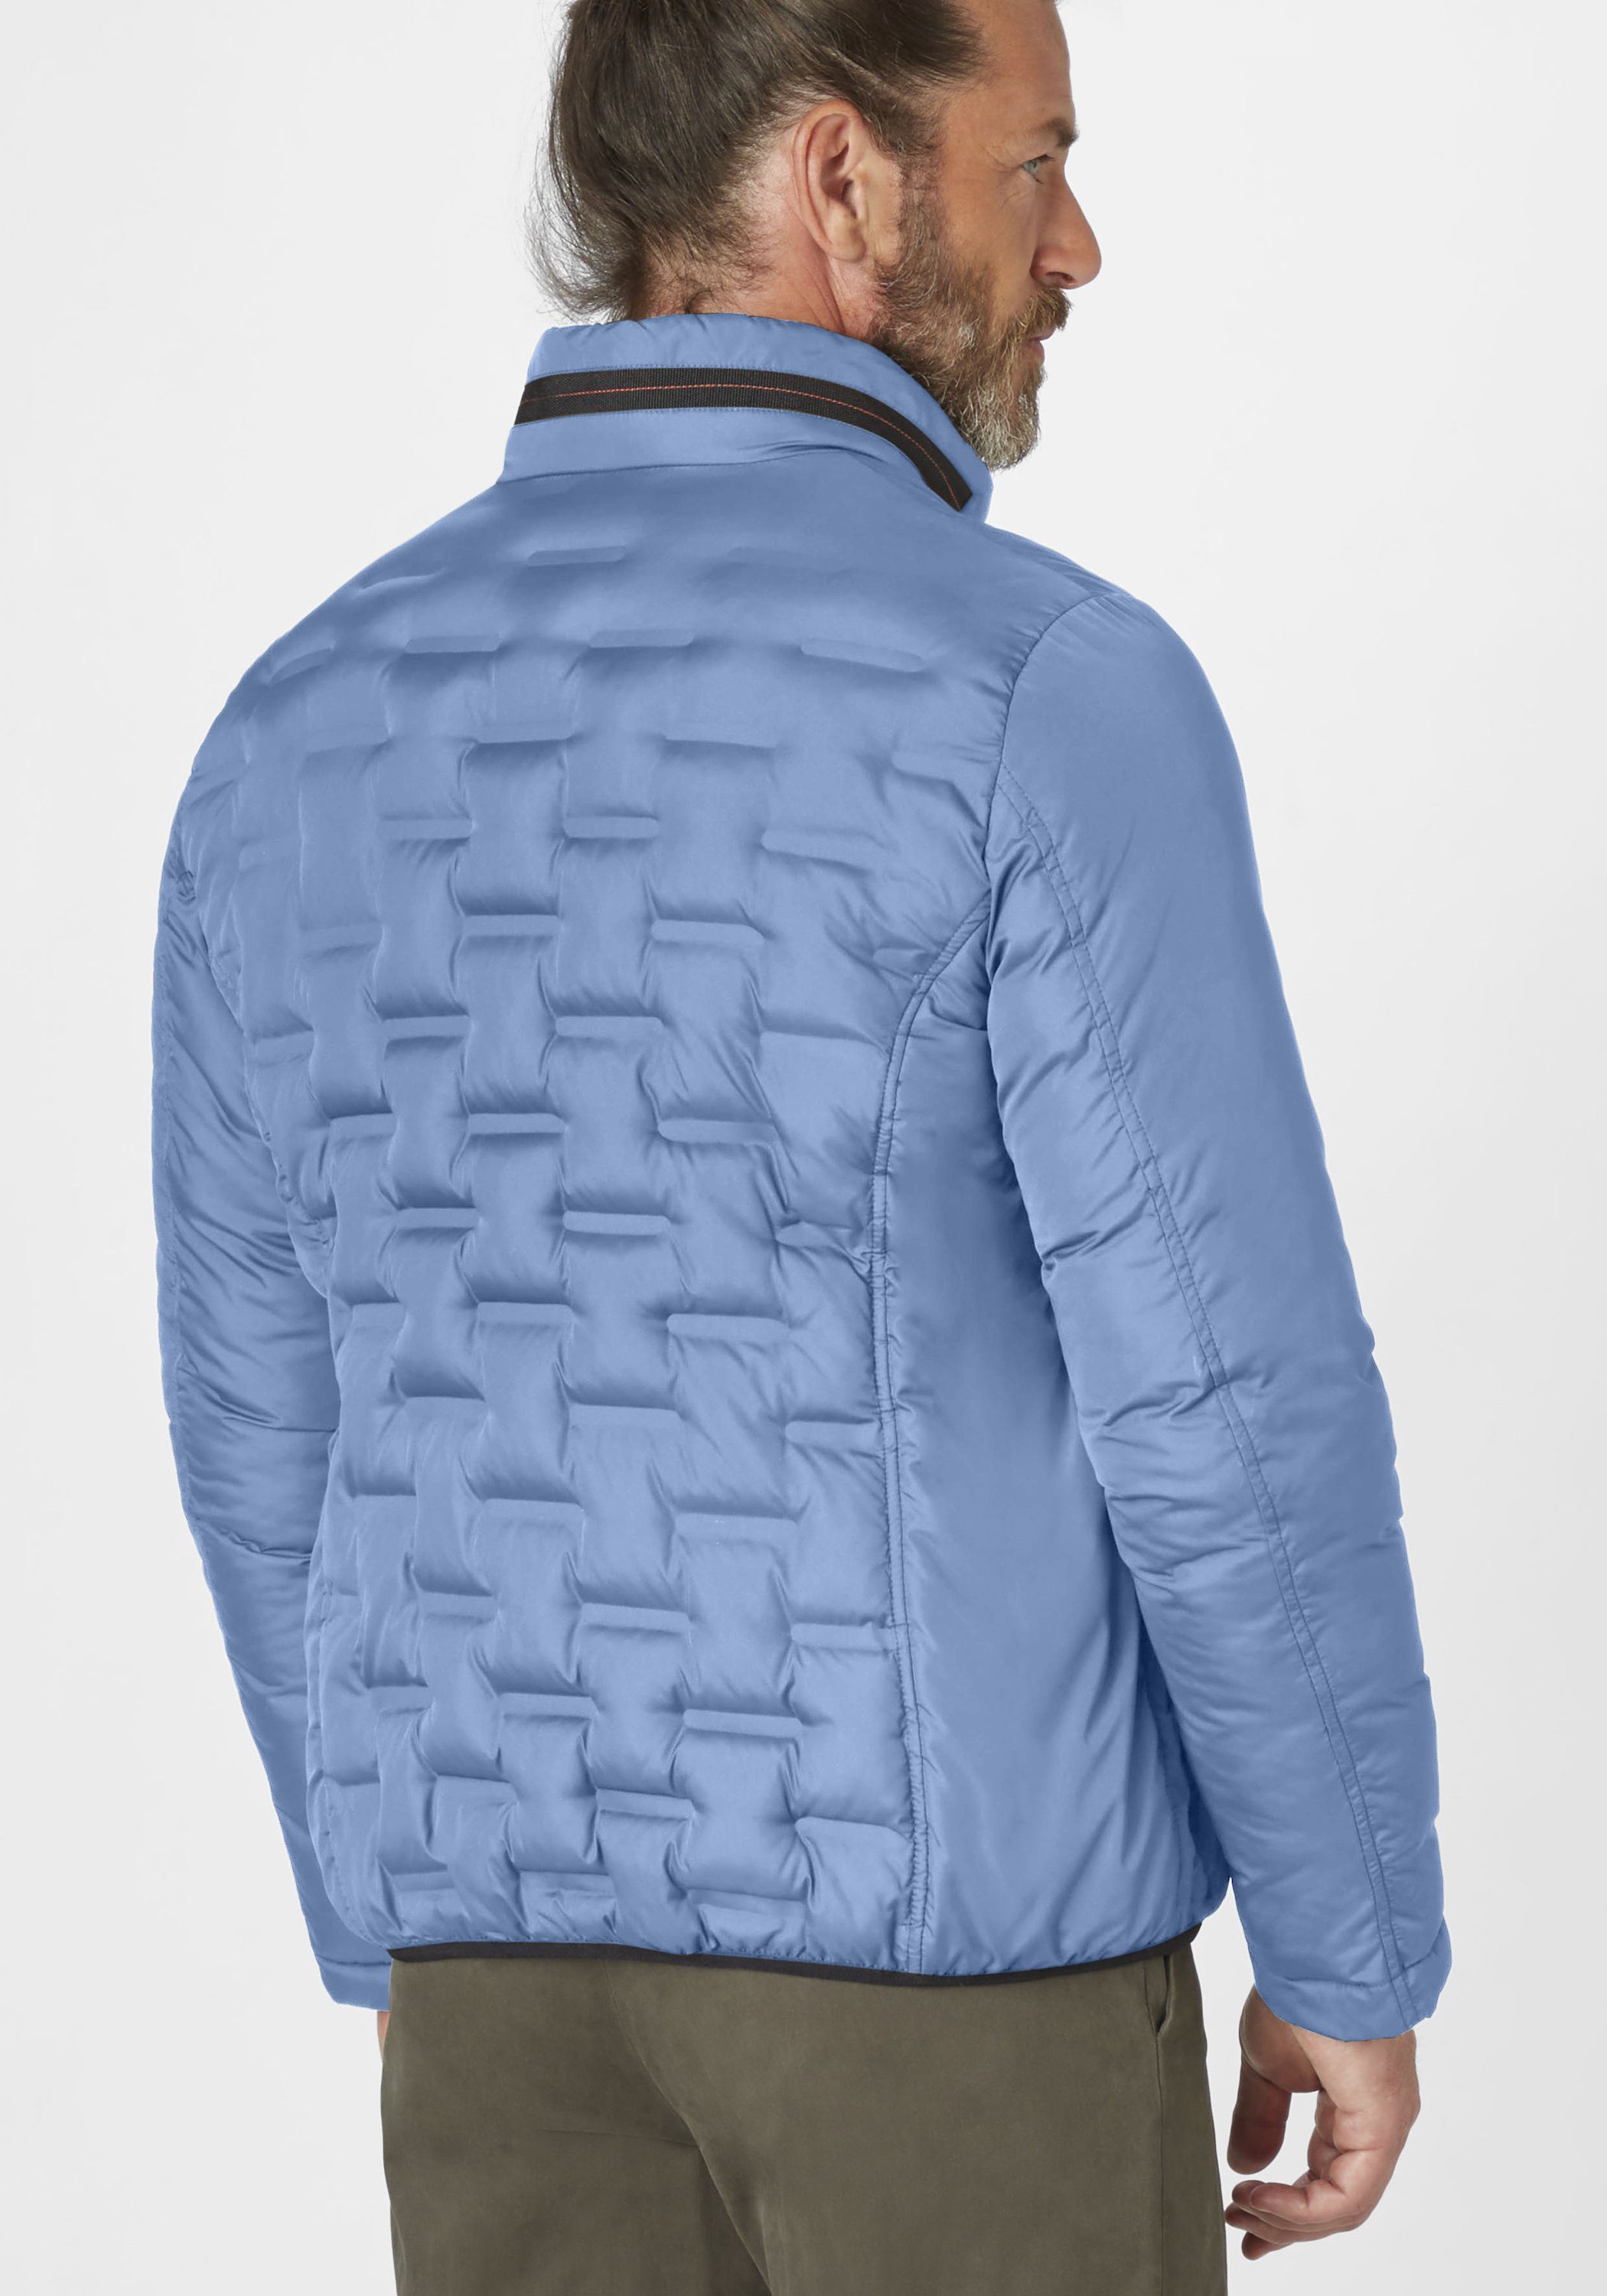 Steppjacke Steppjacke horizon für Übergangszeit blue Jackets APOLLO die S4 Sportive